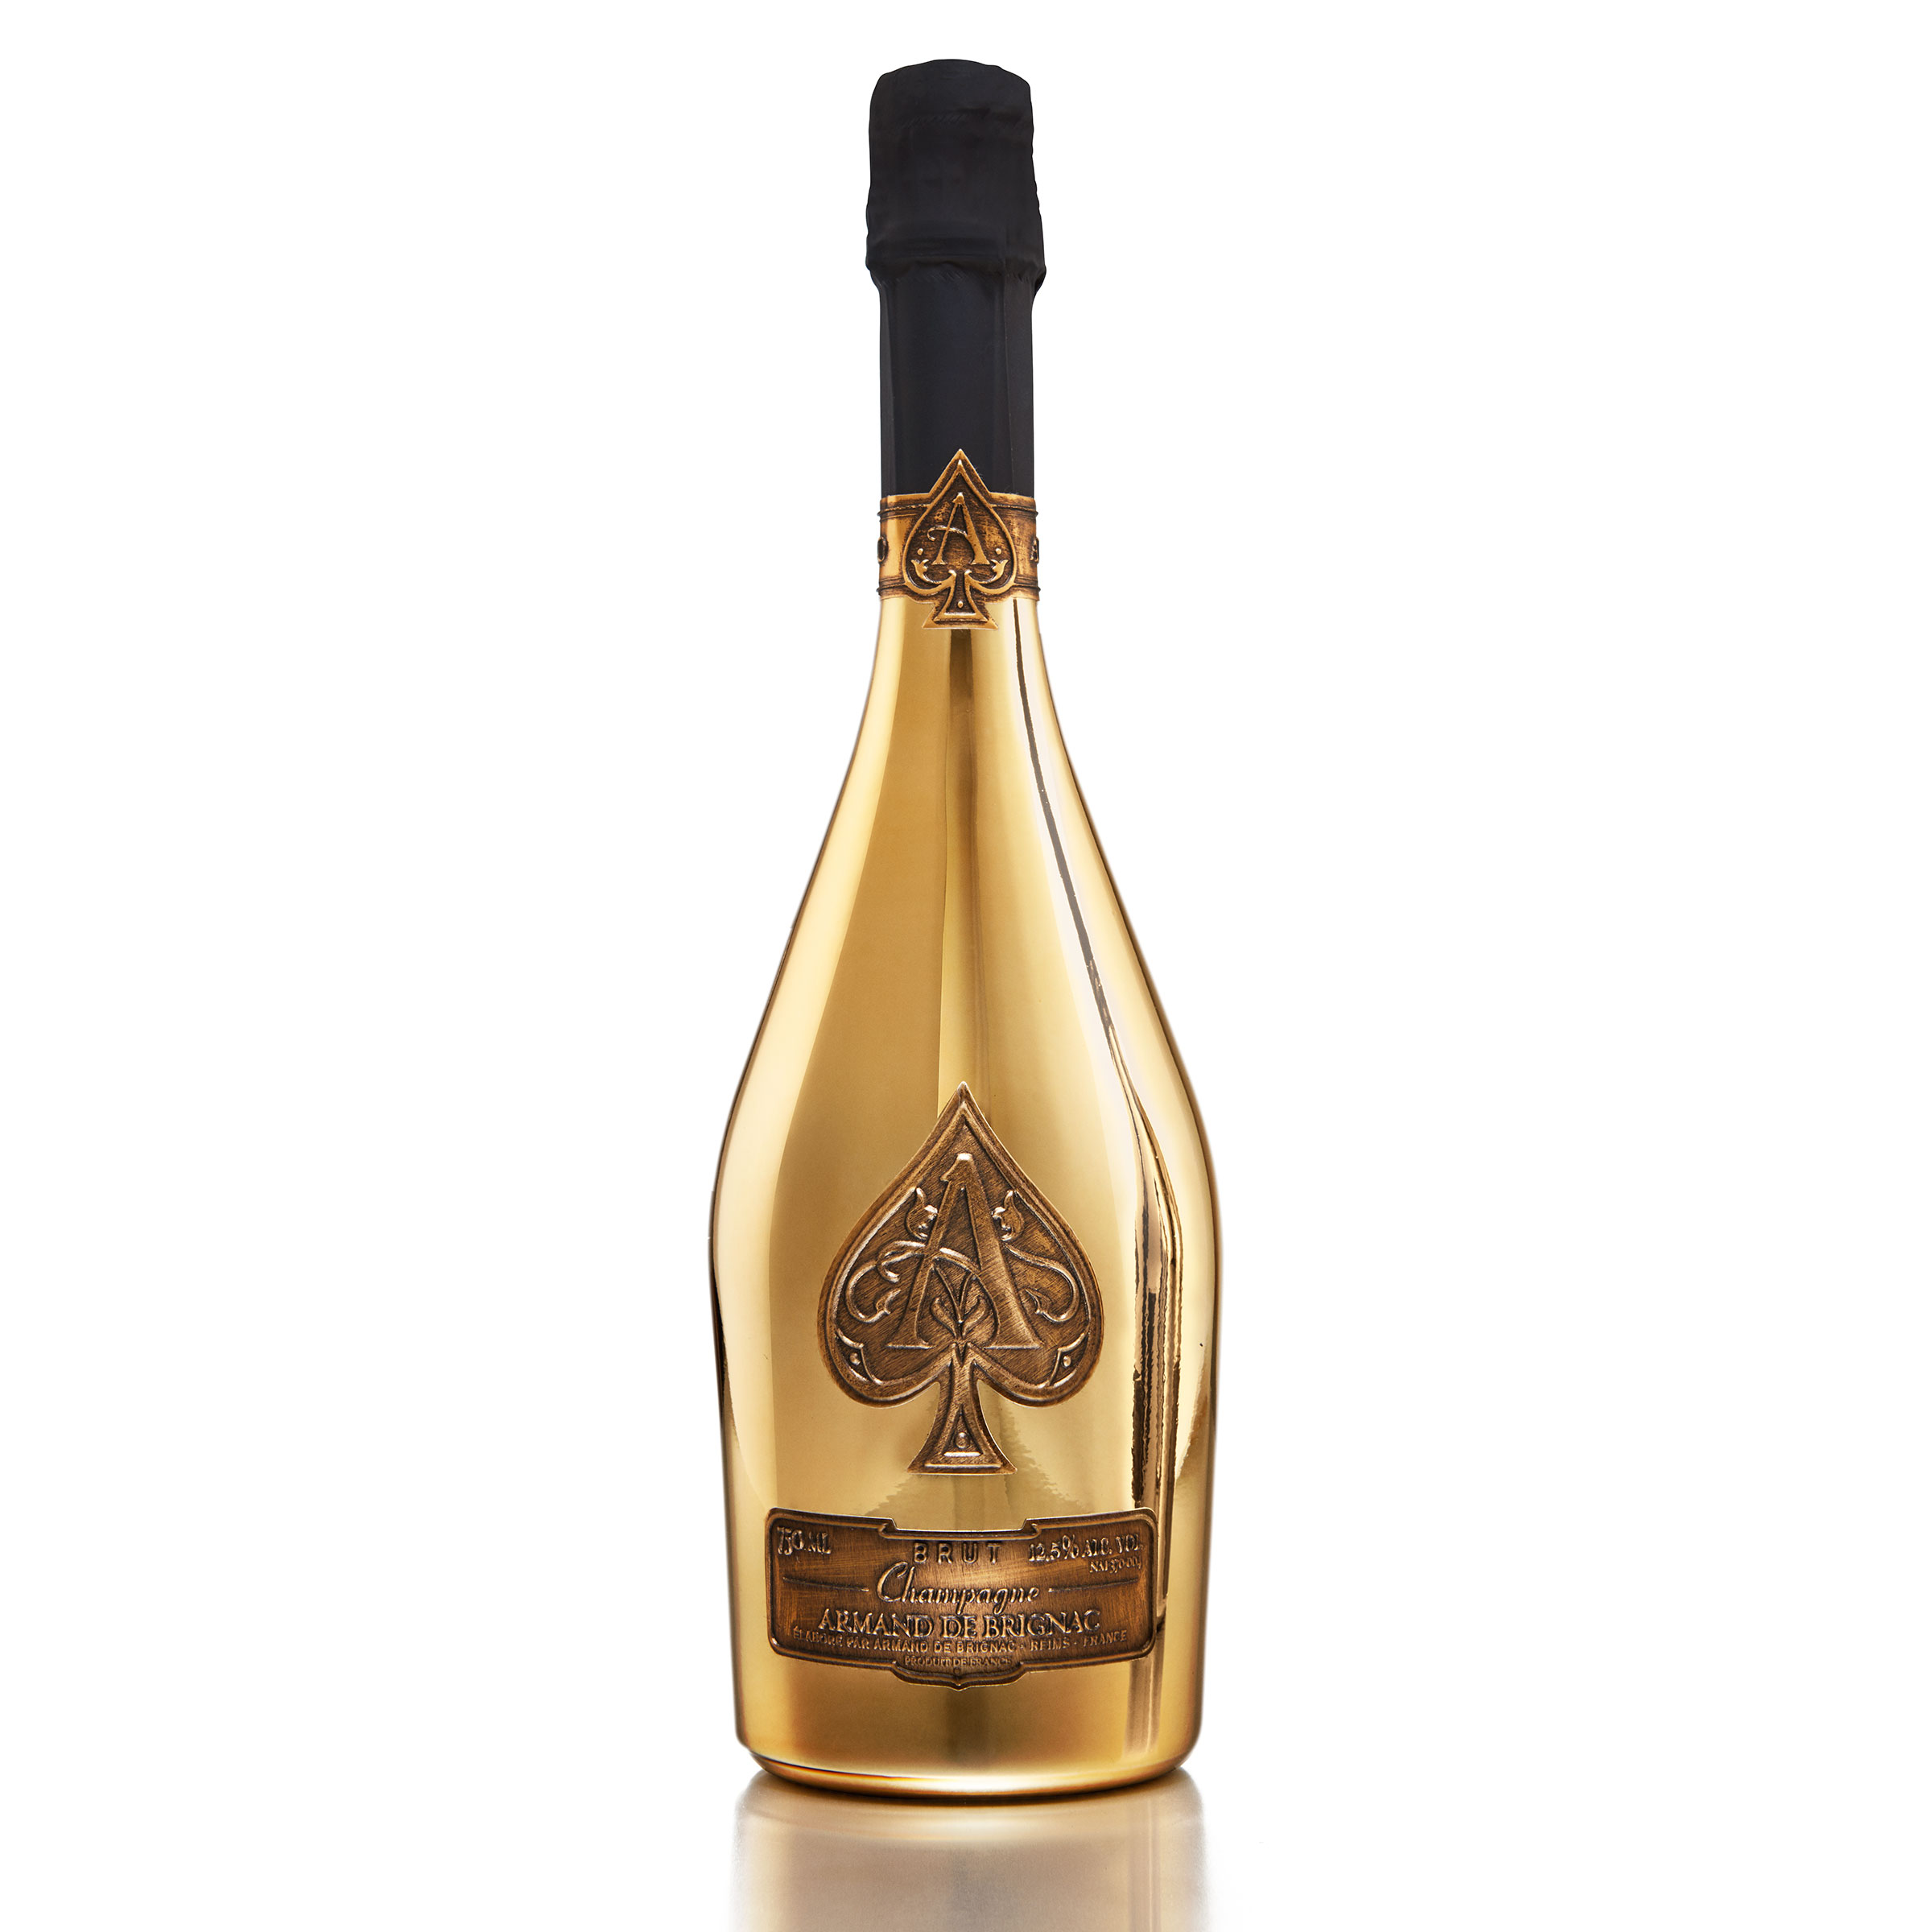 Secondery Armand-de-Brignac-Brut-Gold-bottle.jpg